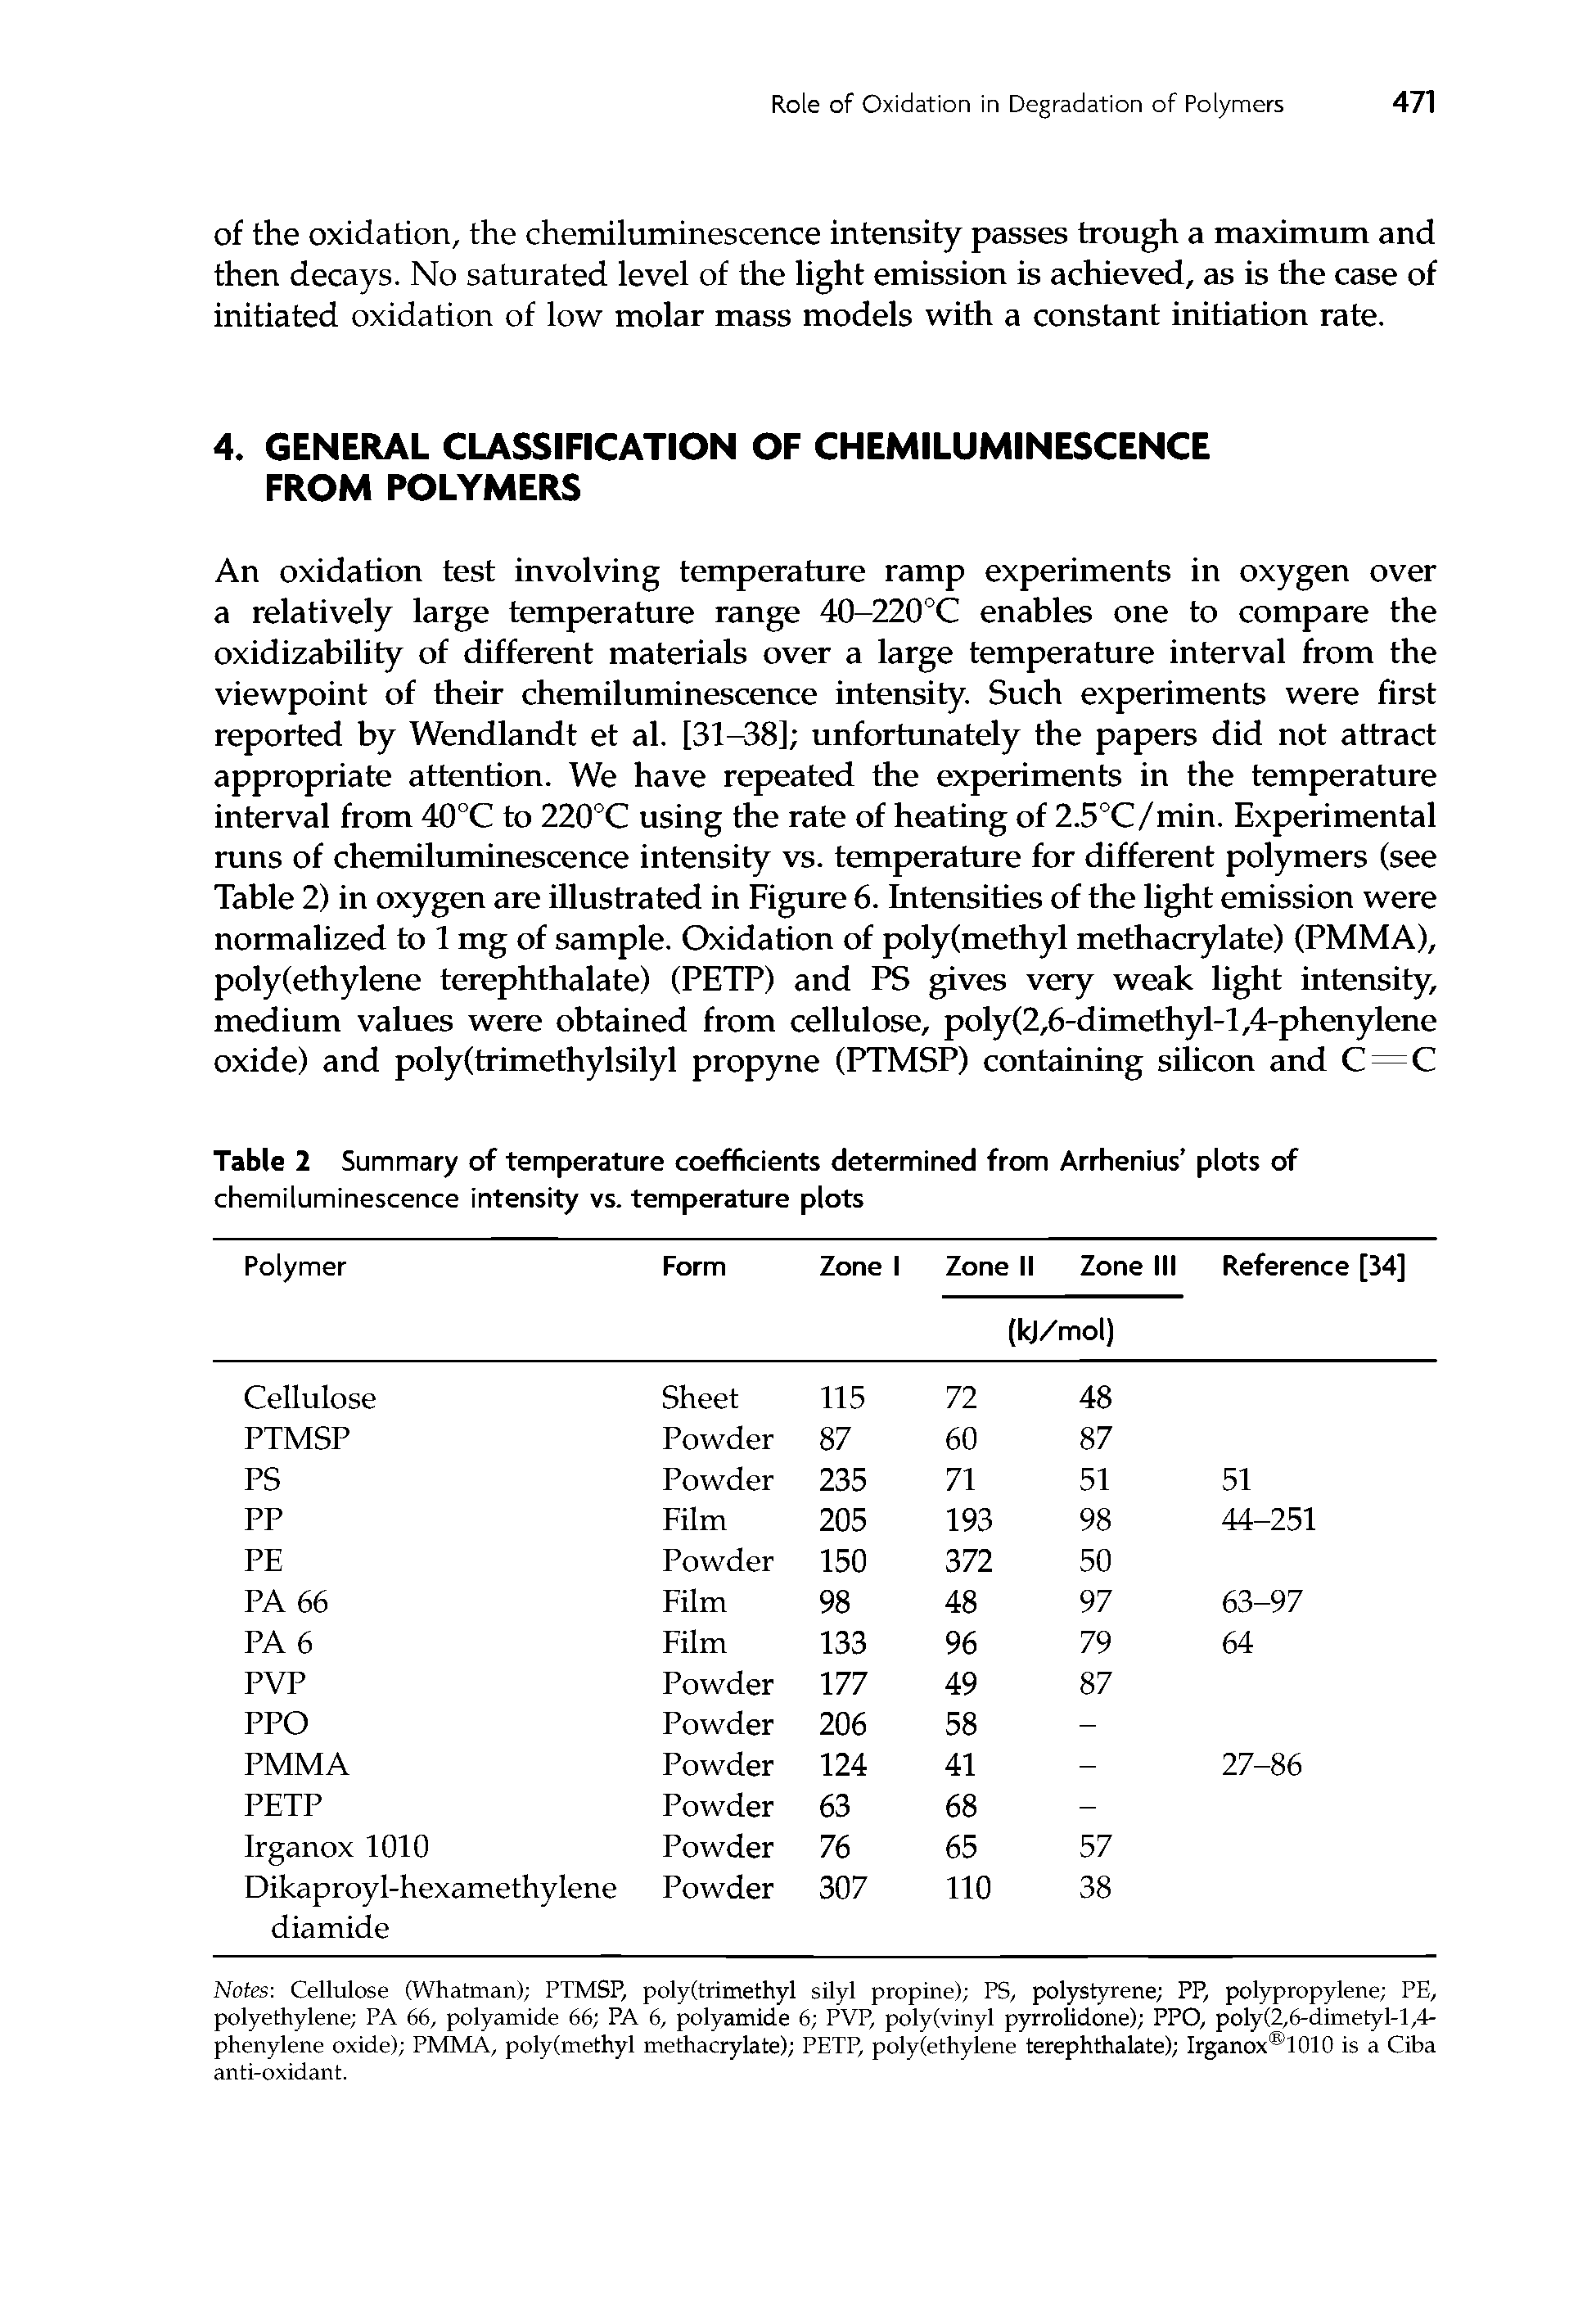 Table 2 Summary of temperature coefficients determined from Arrhenius plots of chemiluminescence intensity vs. temperature plots...